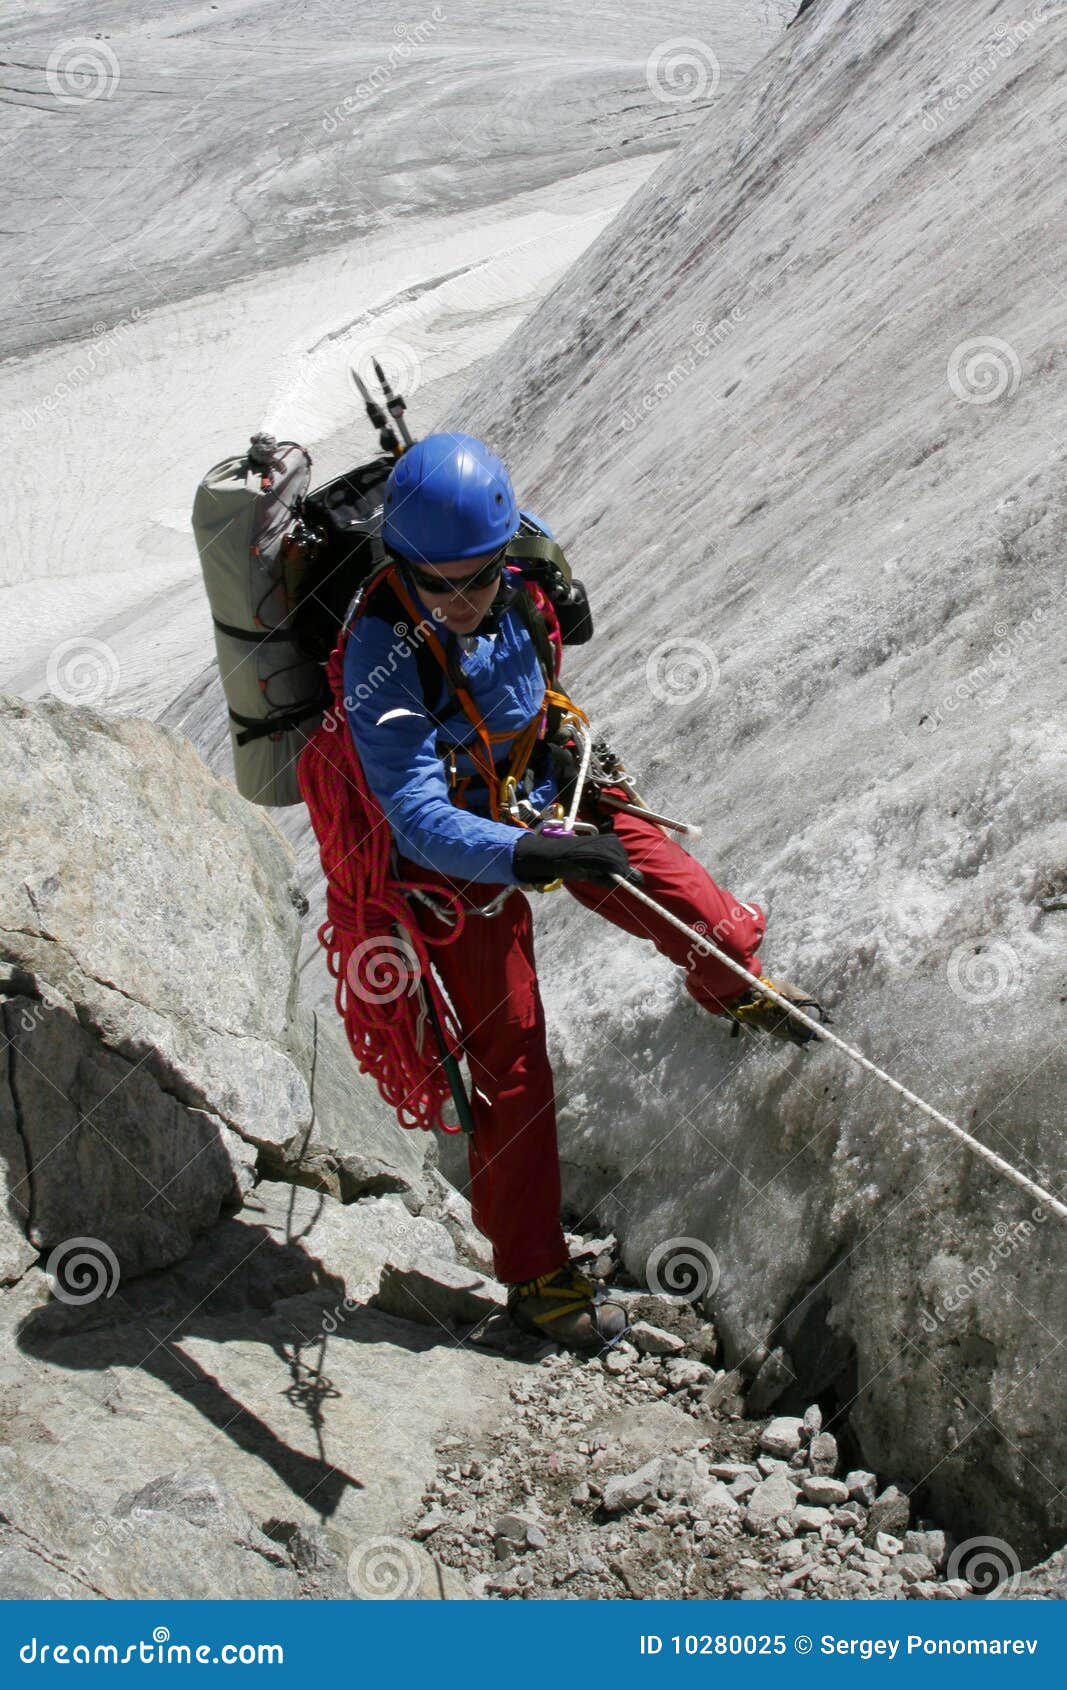 alpinist on glacier.